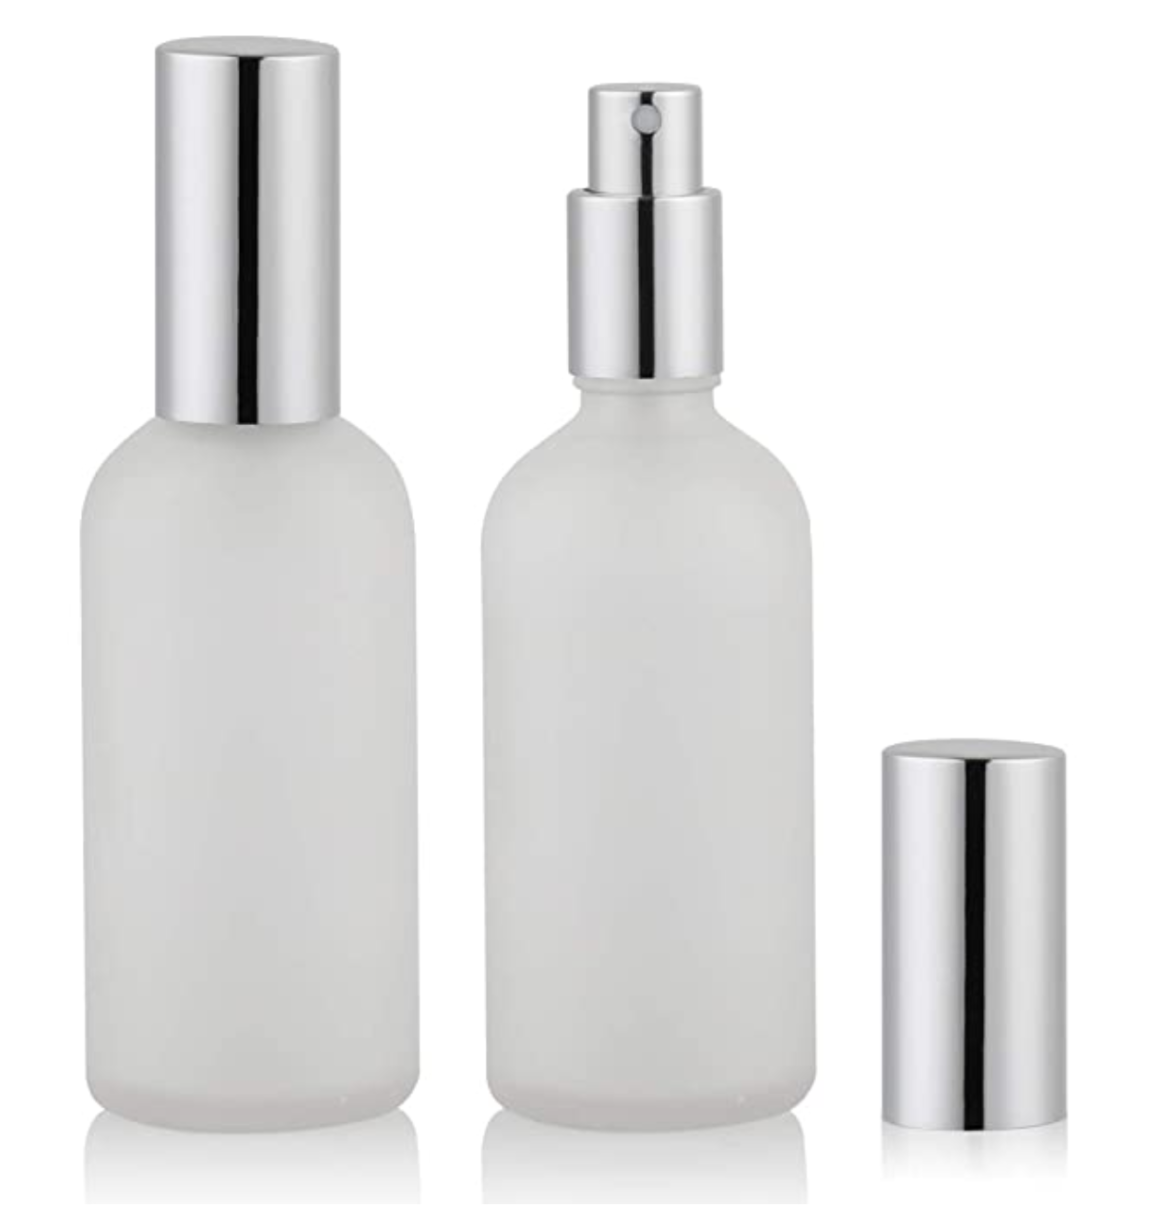 Glass spray bottles